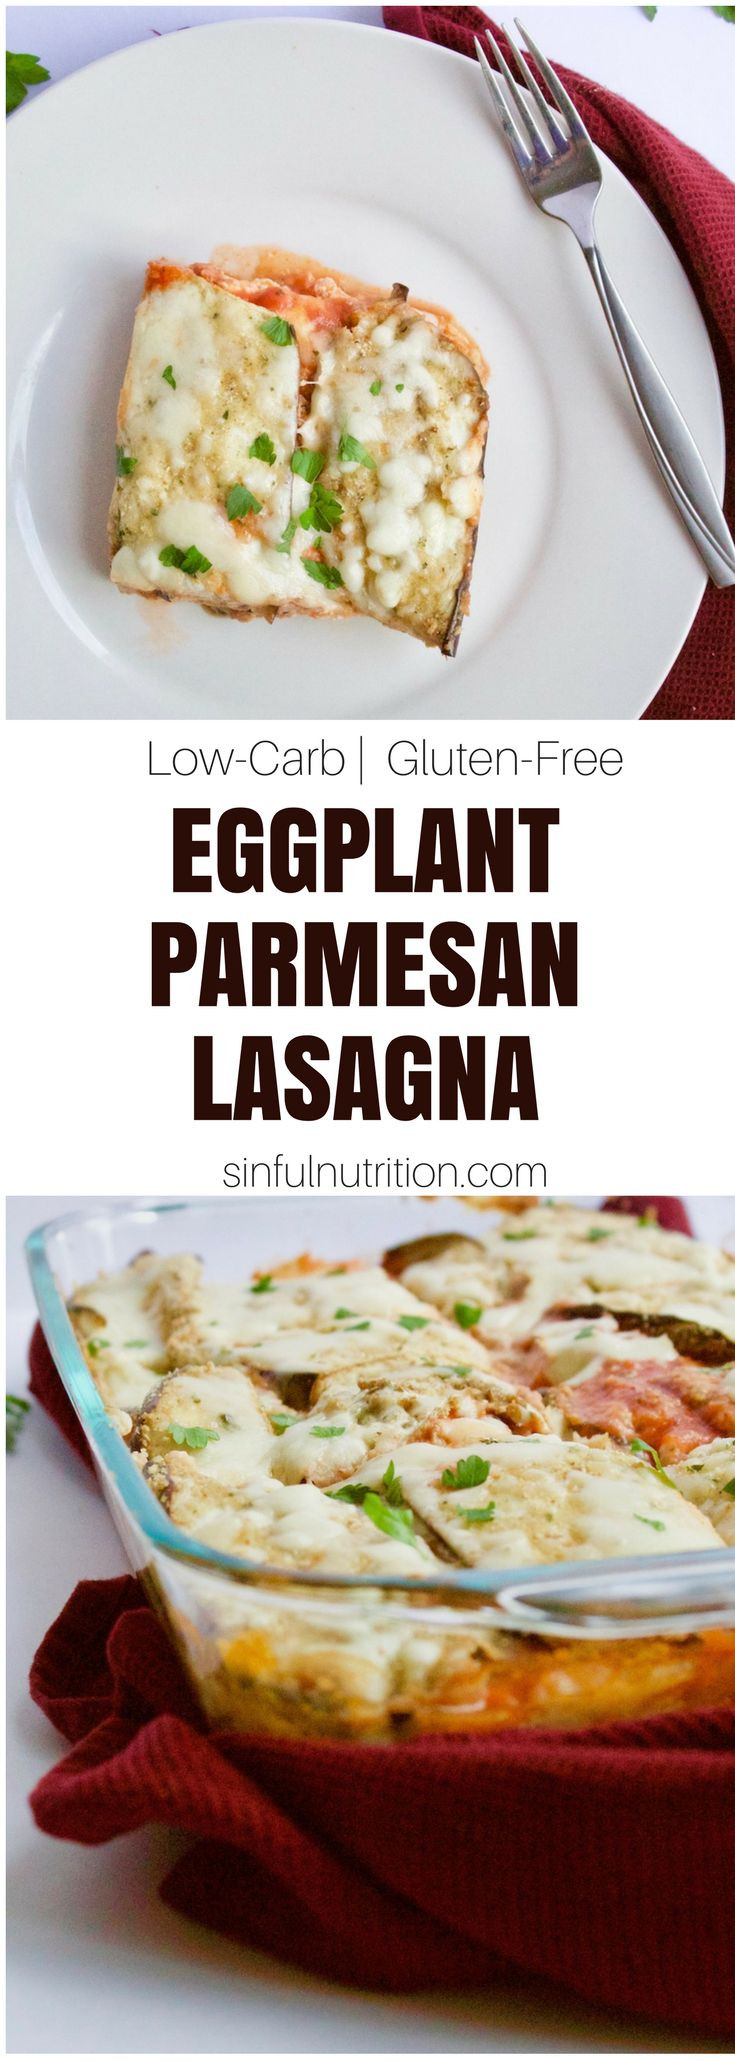 Healthy Eggplant Recipes For Dinner
 Best 25 Eggplant parmesan lasagna ideas on Pinterest